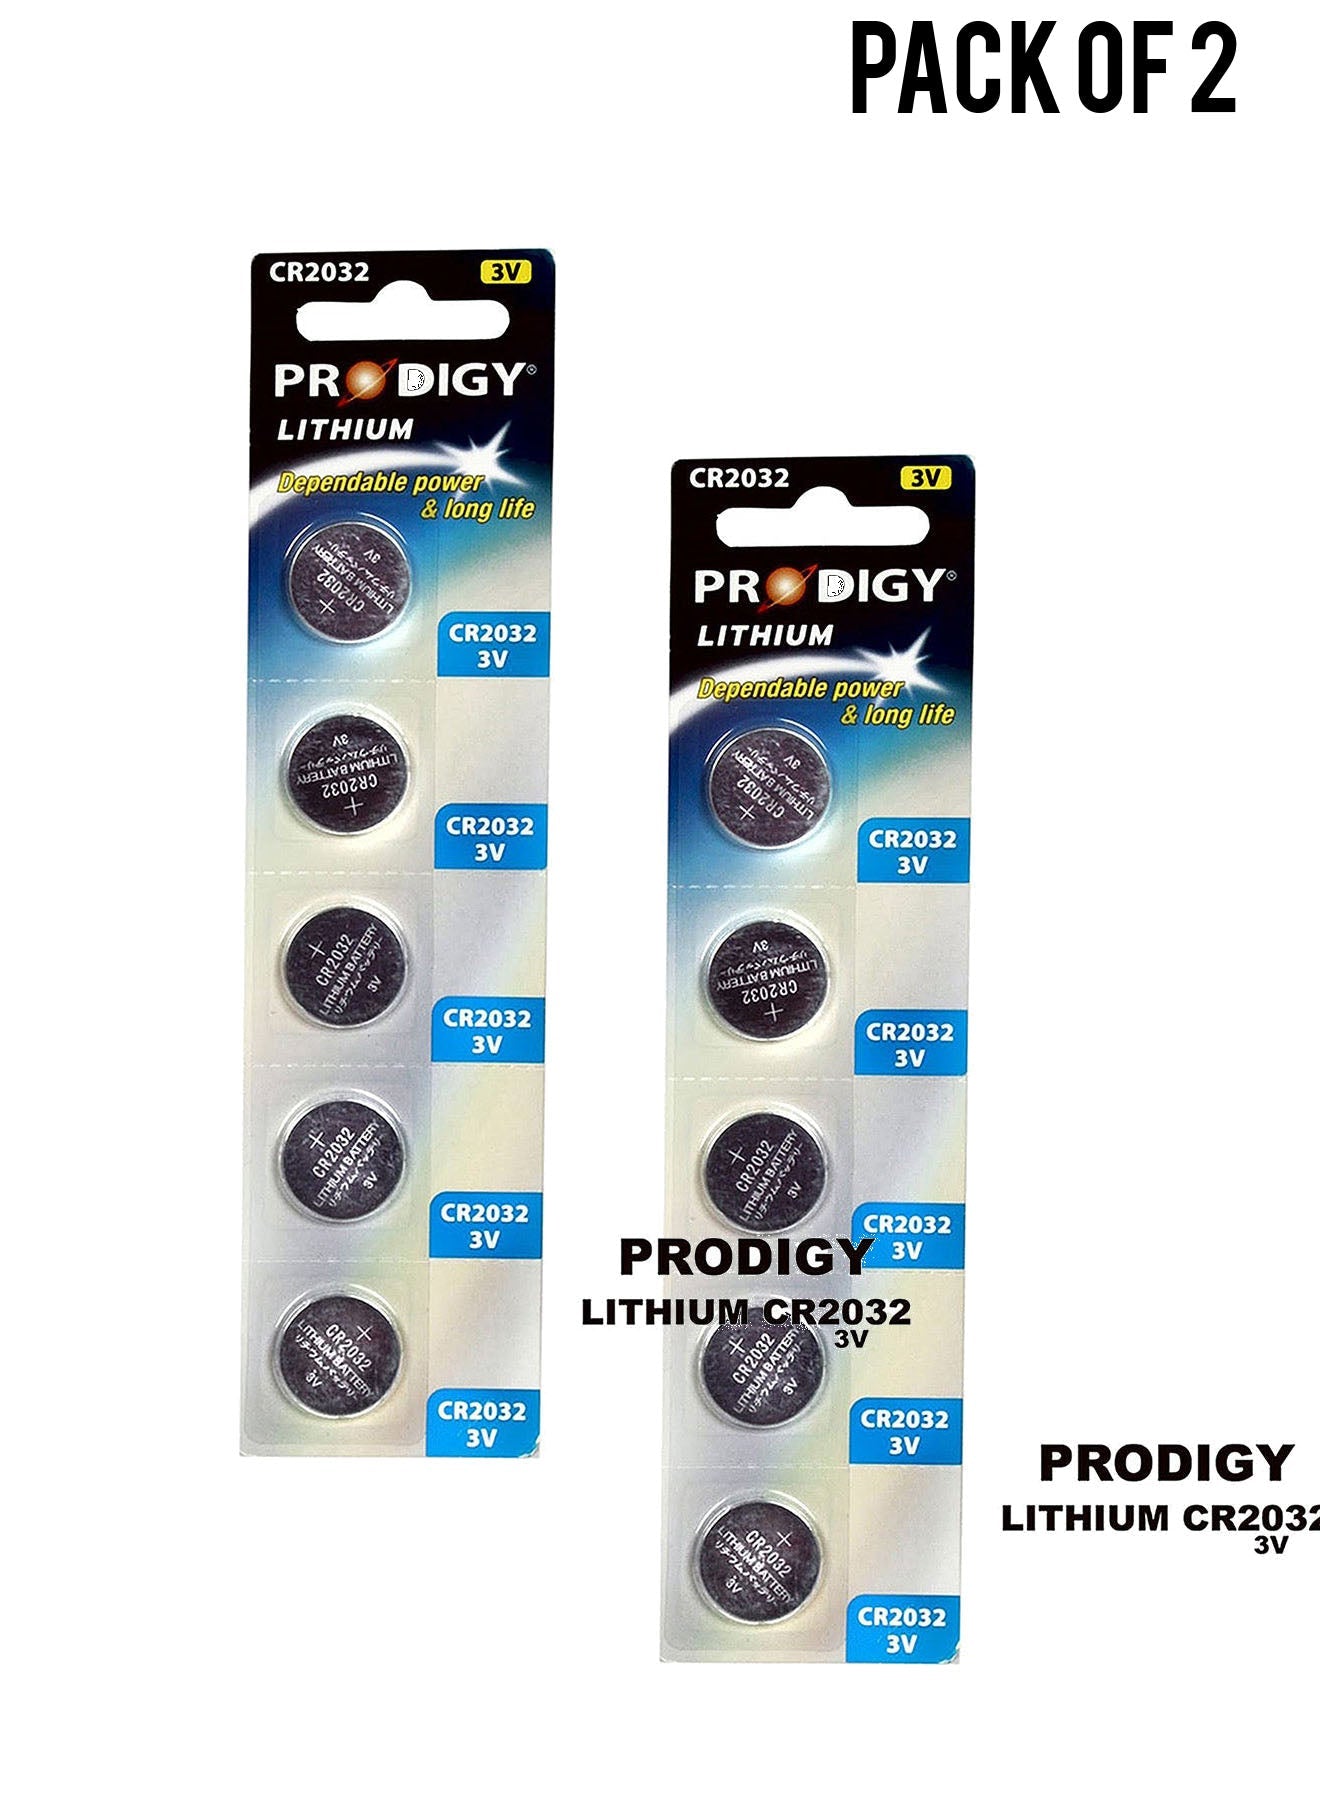 Prodigy Lithium CR2032 3V 5units Value Pack of 2 